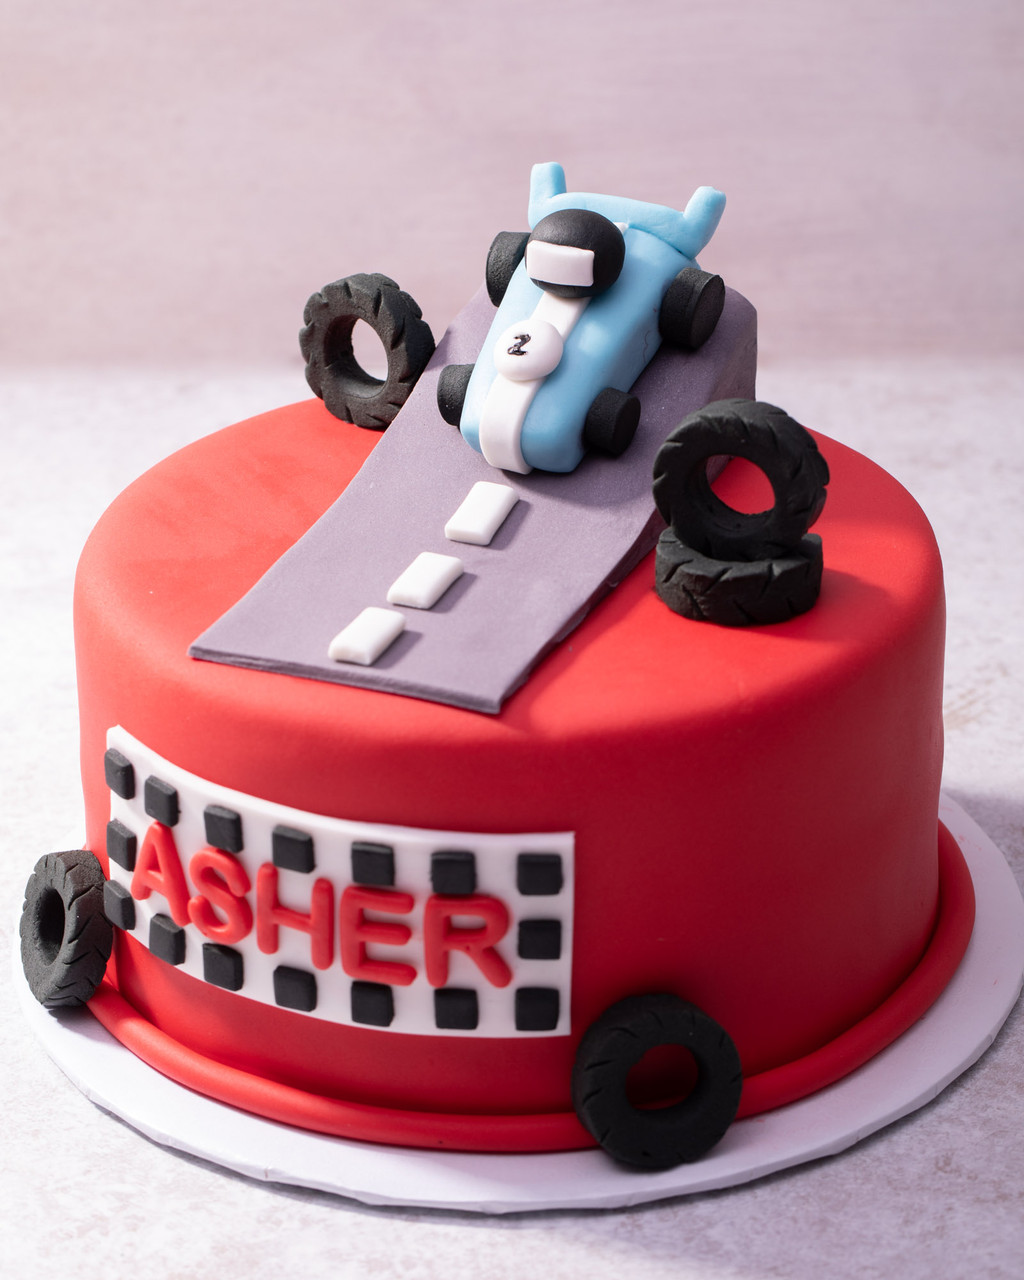 The Cakehole - Race car themed birthday cake. All edible. | Facebook